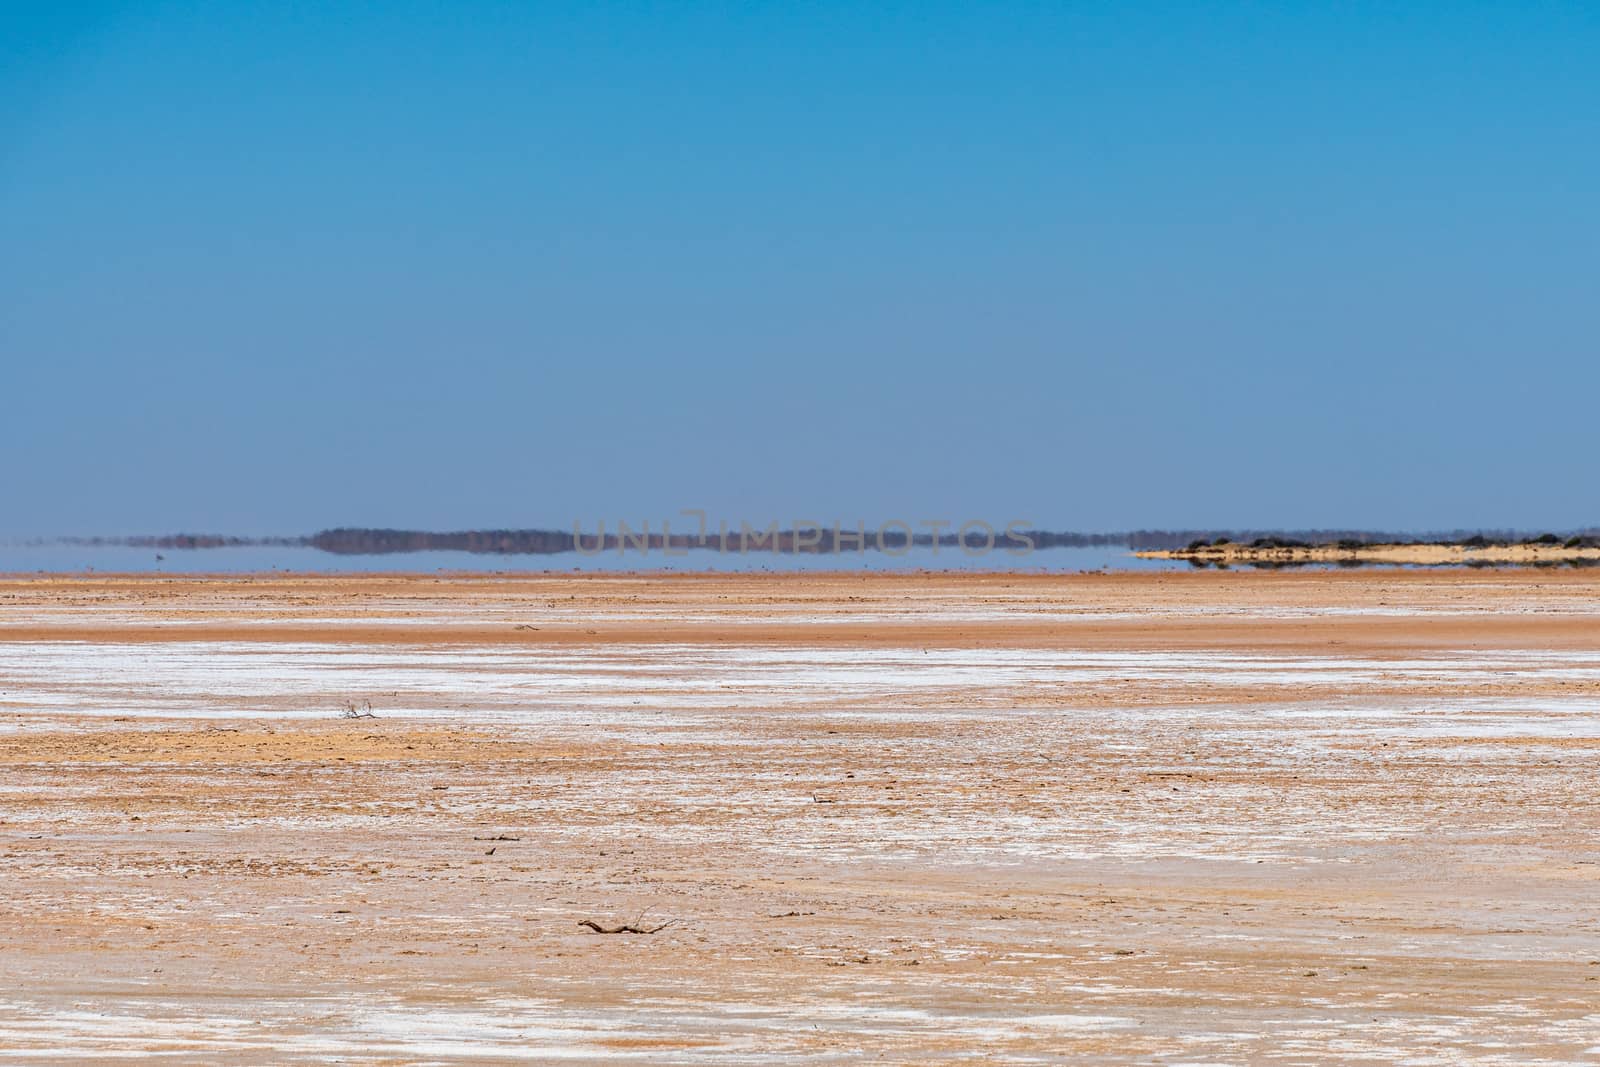 Lake Maclead dry lake in Western Australia mirage at the horizon